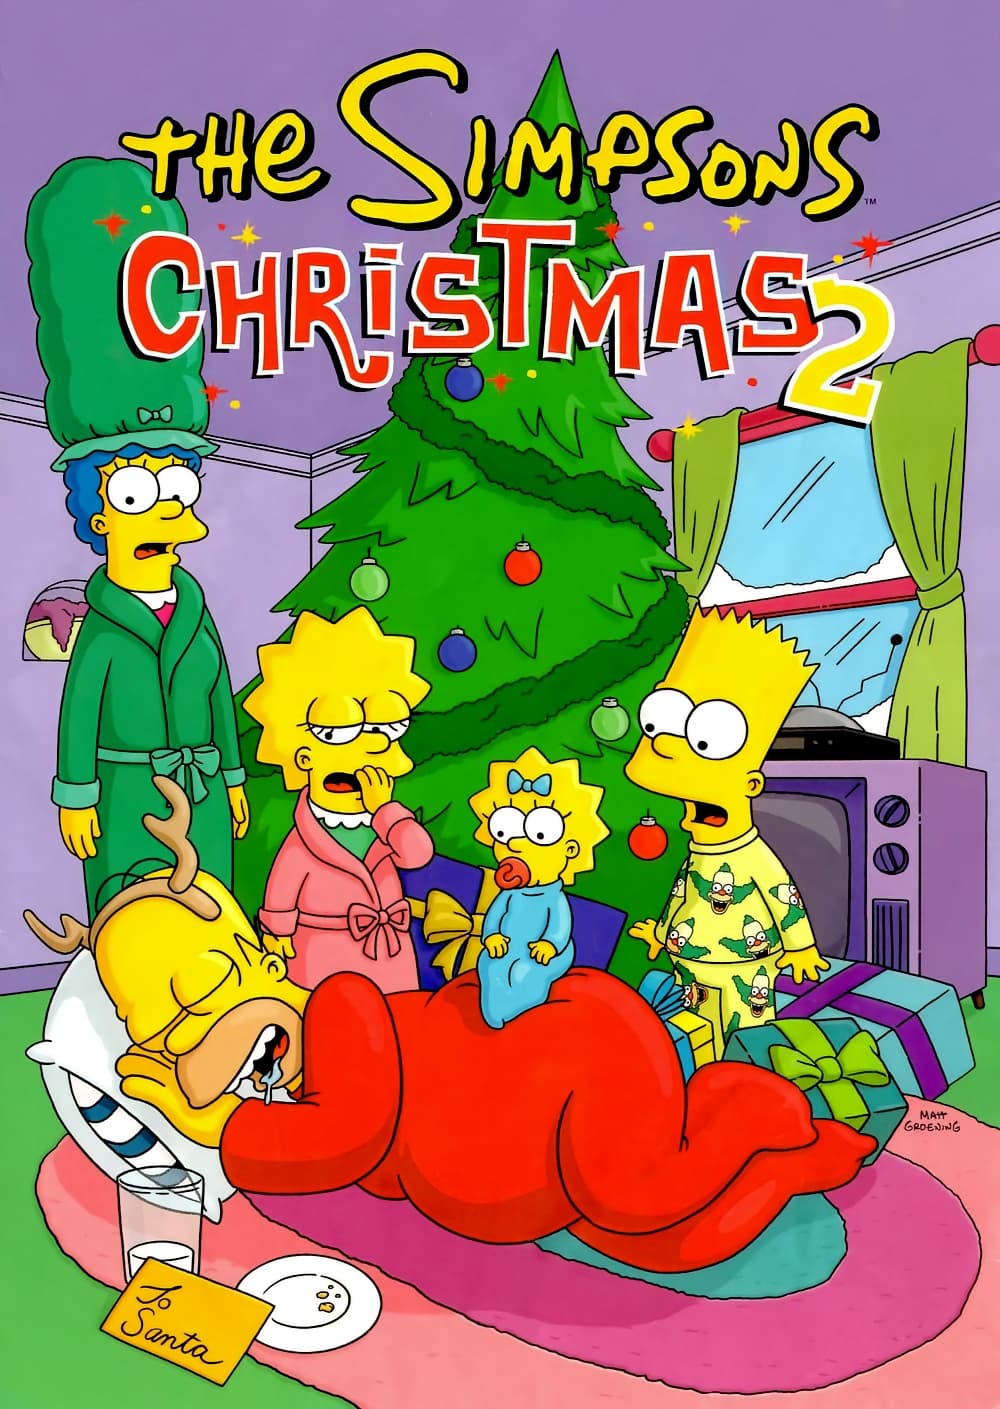 The Simpsons: Christmas 2 (2004)